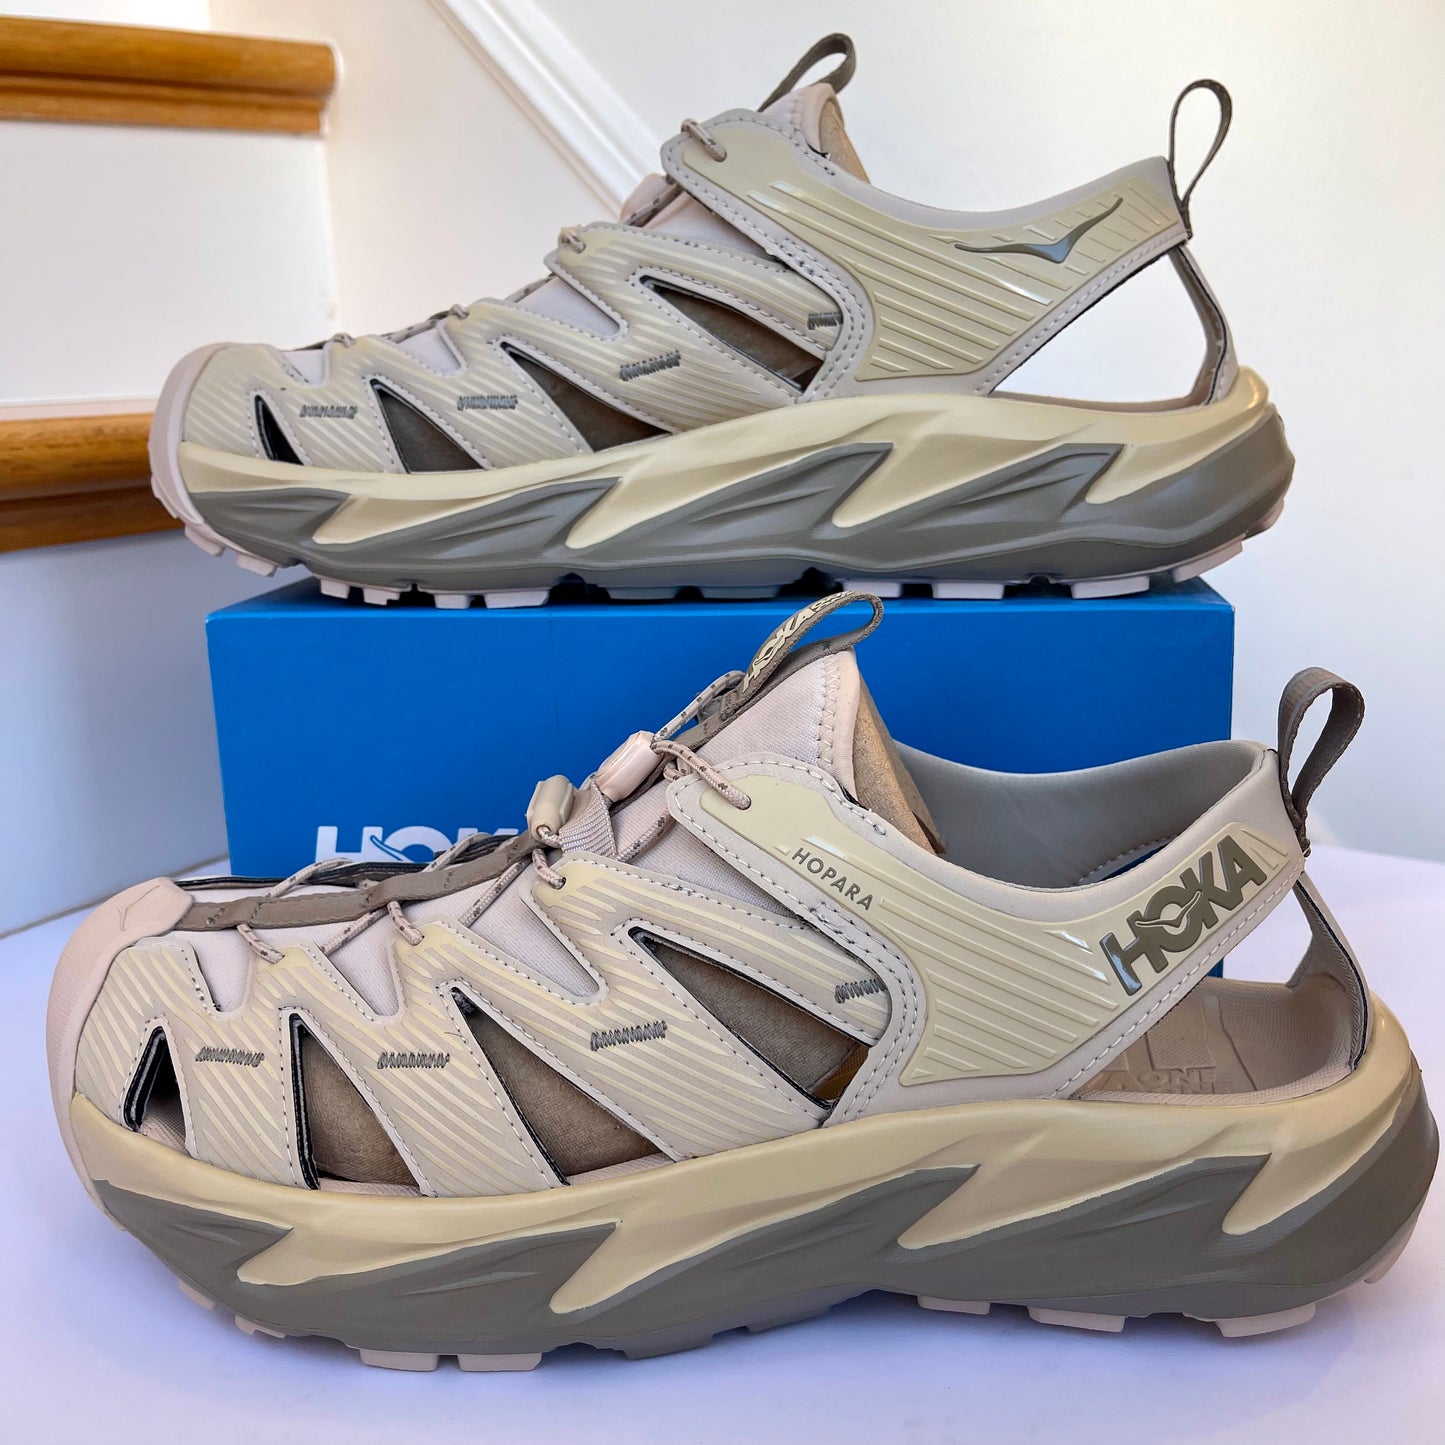 Hoka Hopara Hiking Sandal Wet / Dry shoe in Shifting Sand / Dune beige shoes